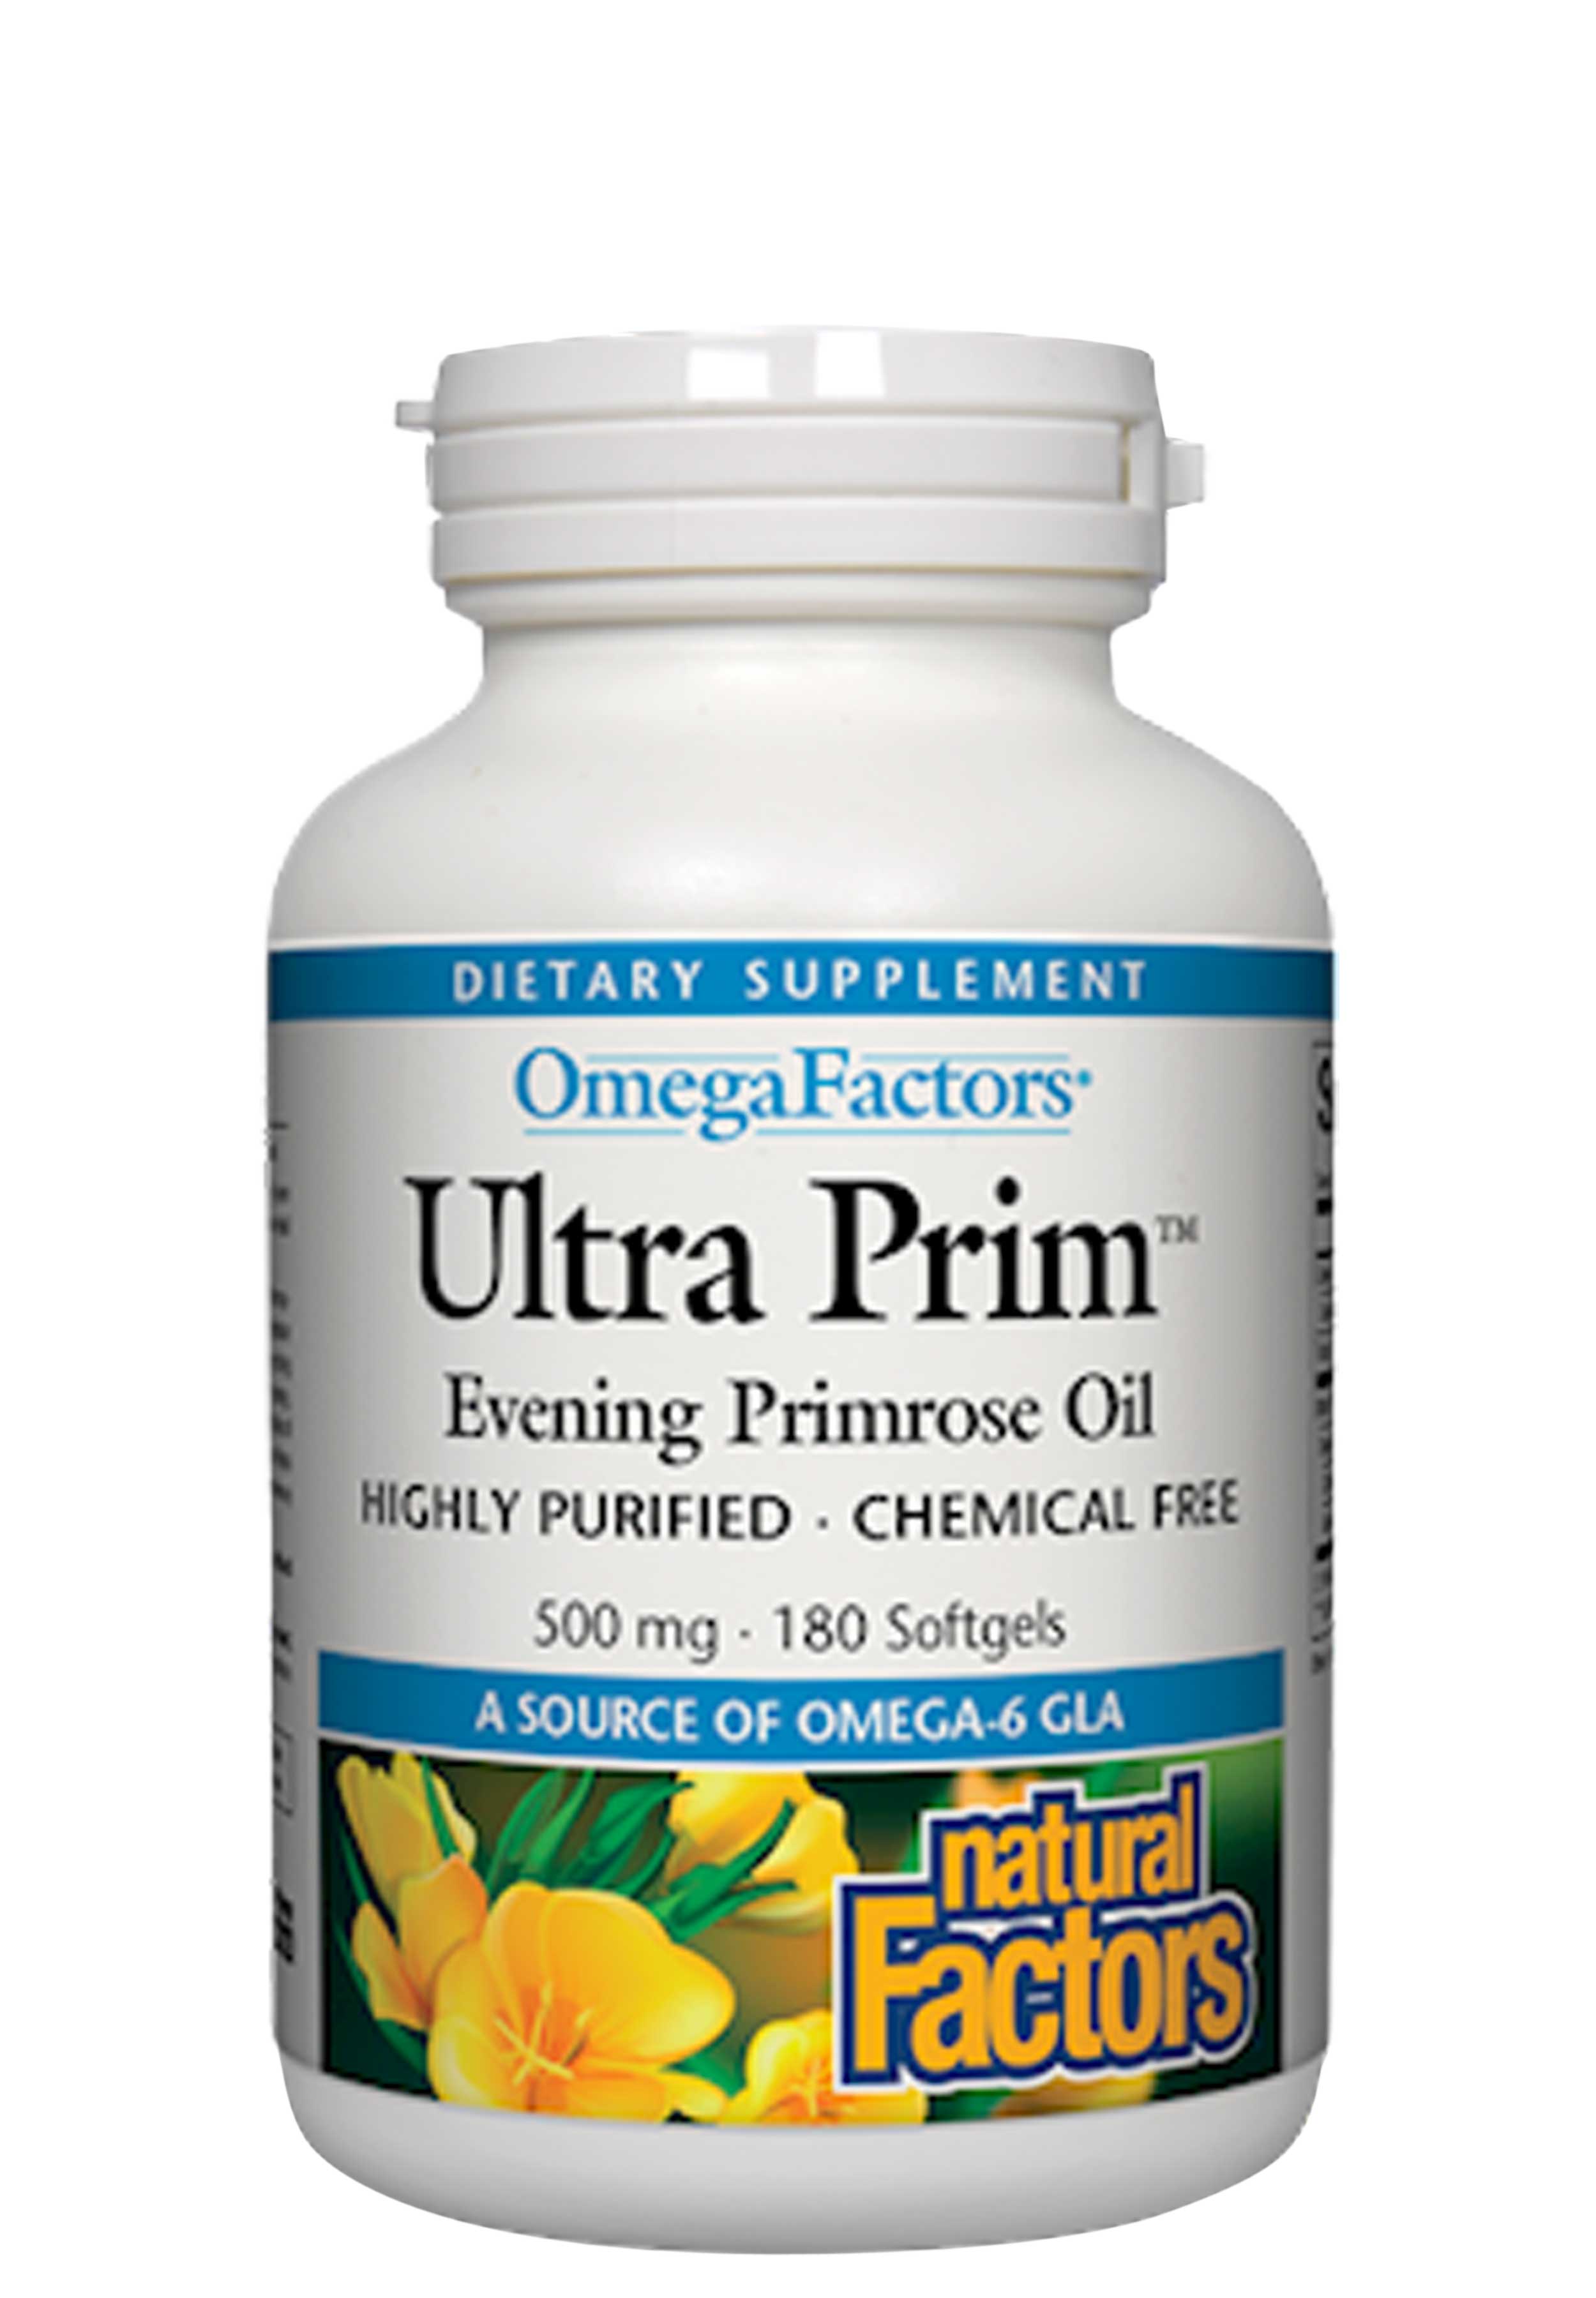 Natural Factors Ultra Prim Evening Primrose Oil